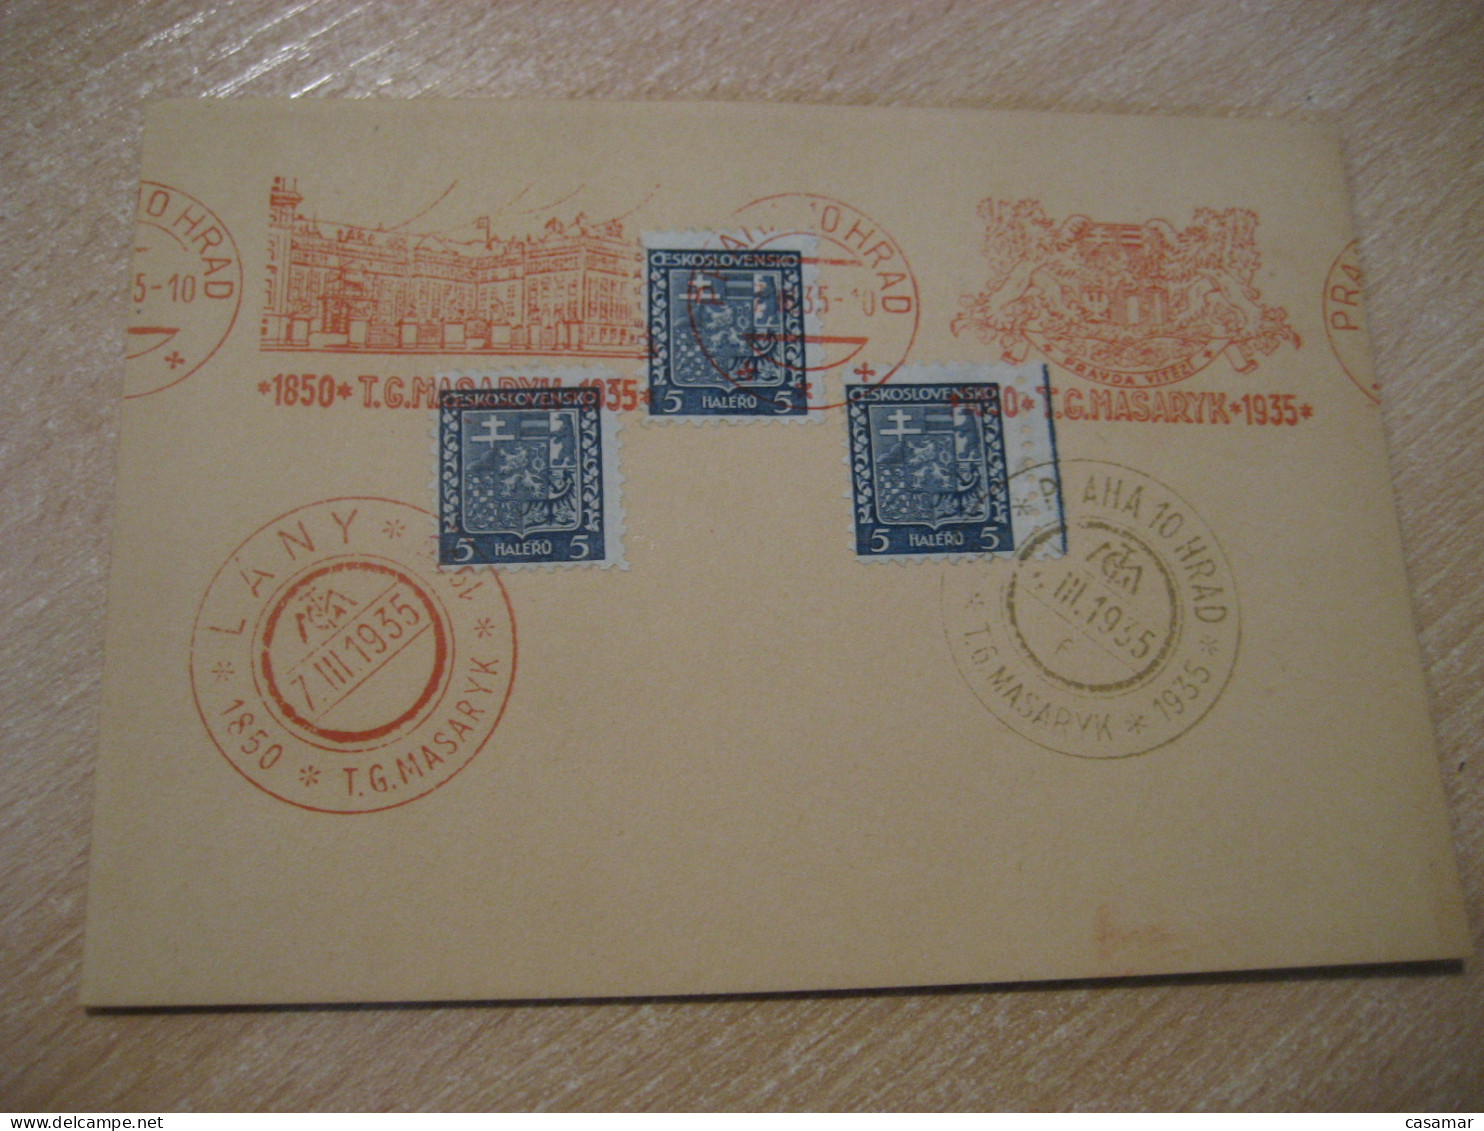 PRAGA 1935 Lany T. G. Masaryk 1850 1935 Meter Mail Cancel Card CZECHOSLOVAKIA - Storia Postale